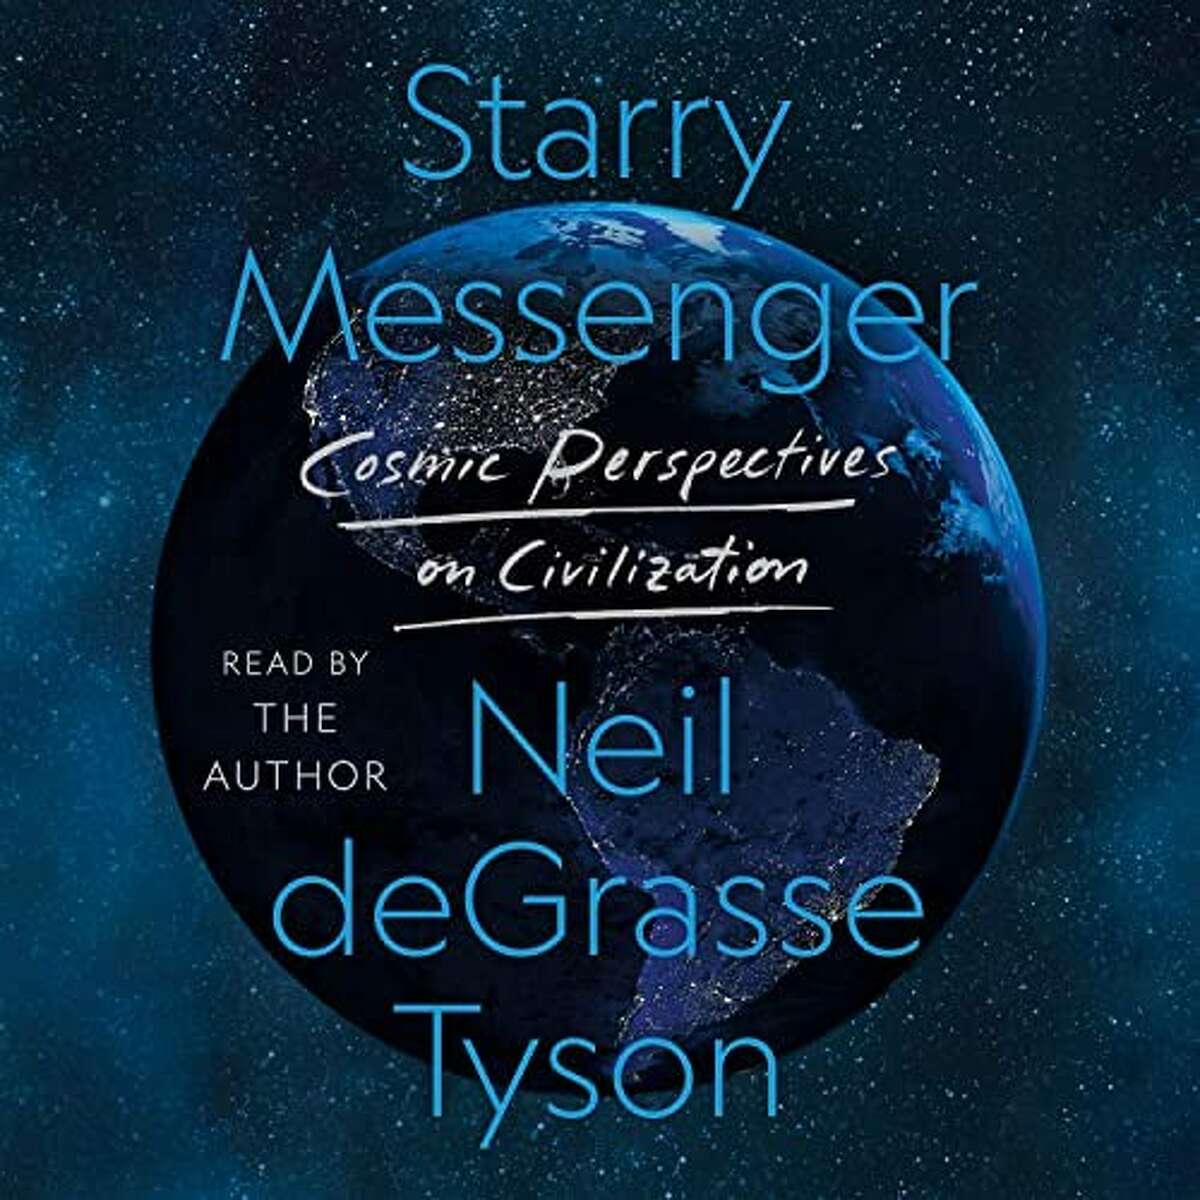 "Starry Messenger" by Neil deGrasse Tyson